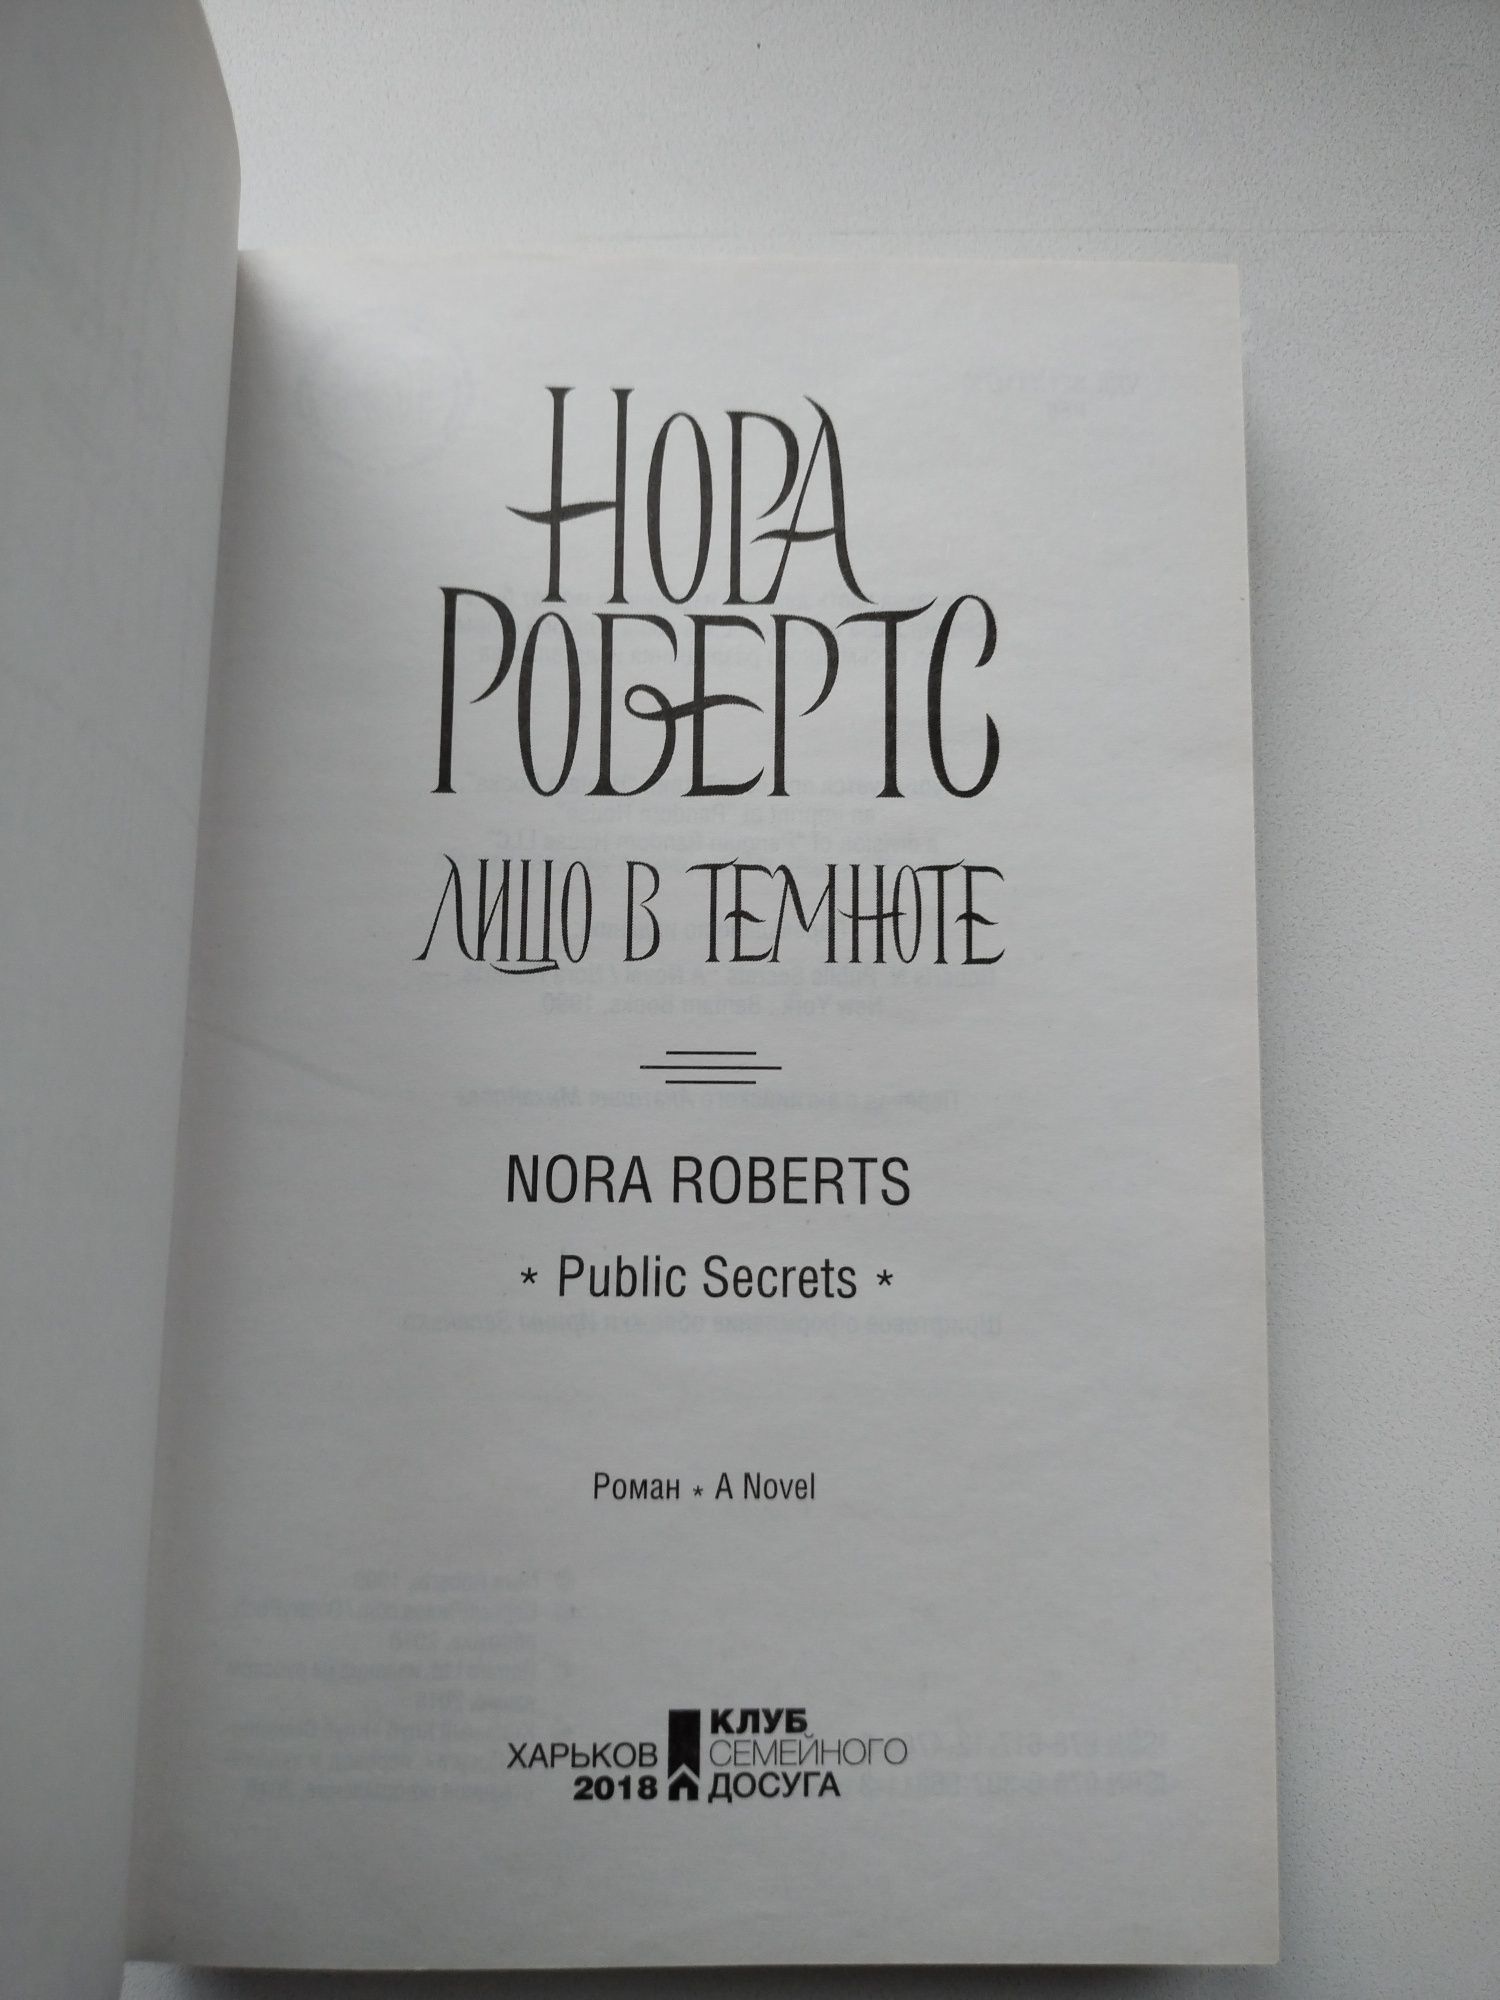 Книга "Лицо в темноте" Нора Робертс